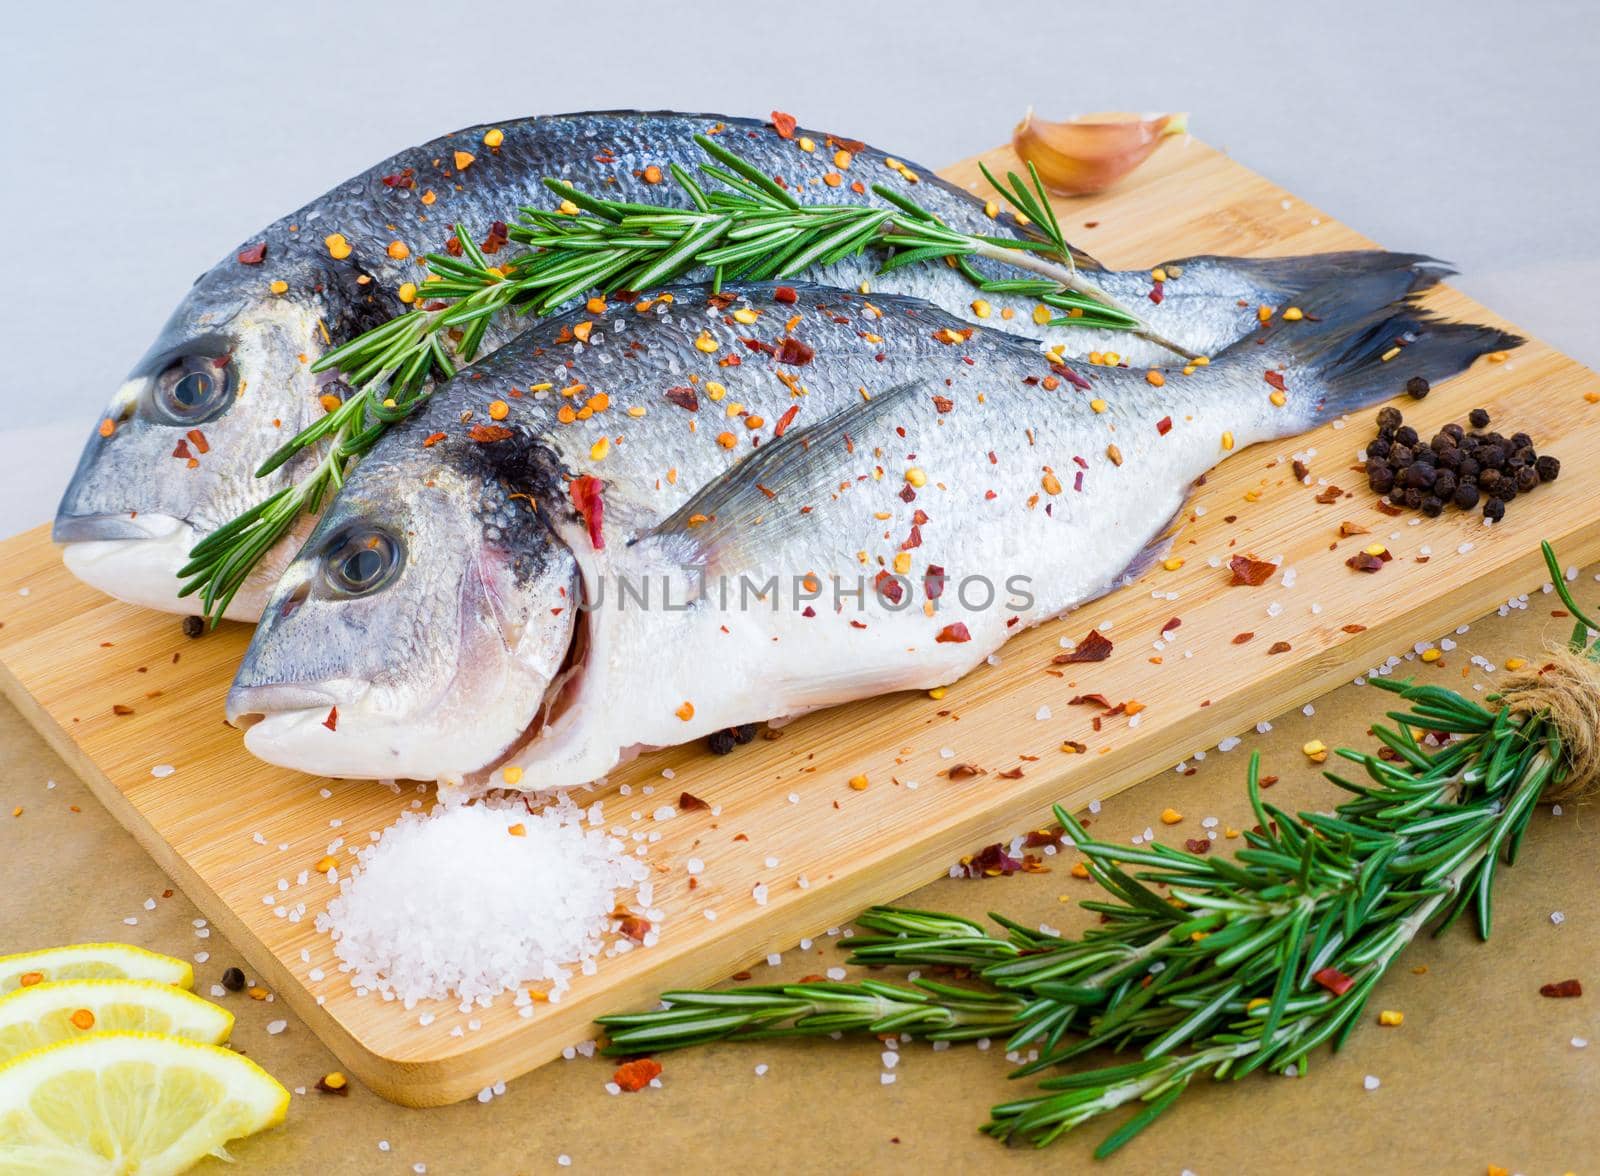 Mediterranean seafood concept. Raw dorado fish with lemon, spices and rosemary on wooden board. Fresh organic sea bream or dorada fish.